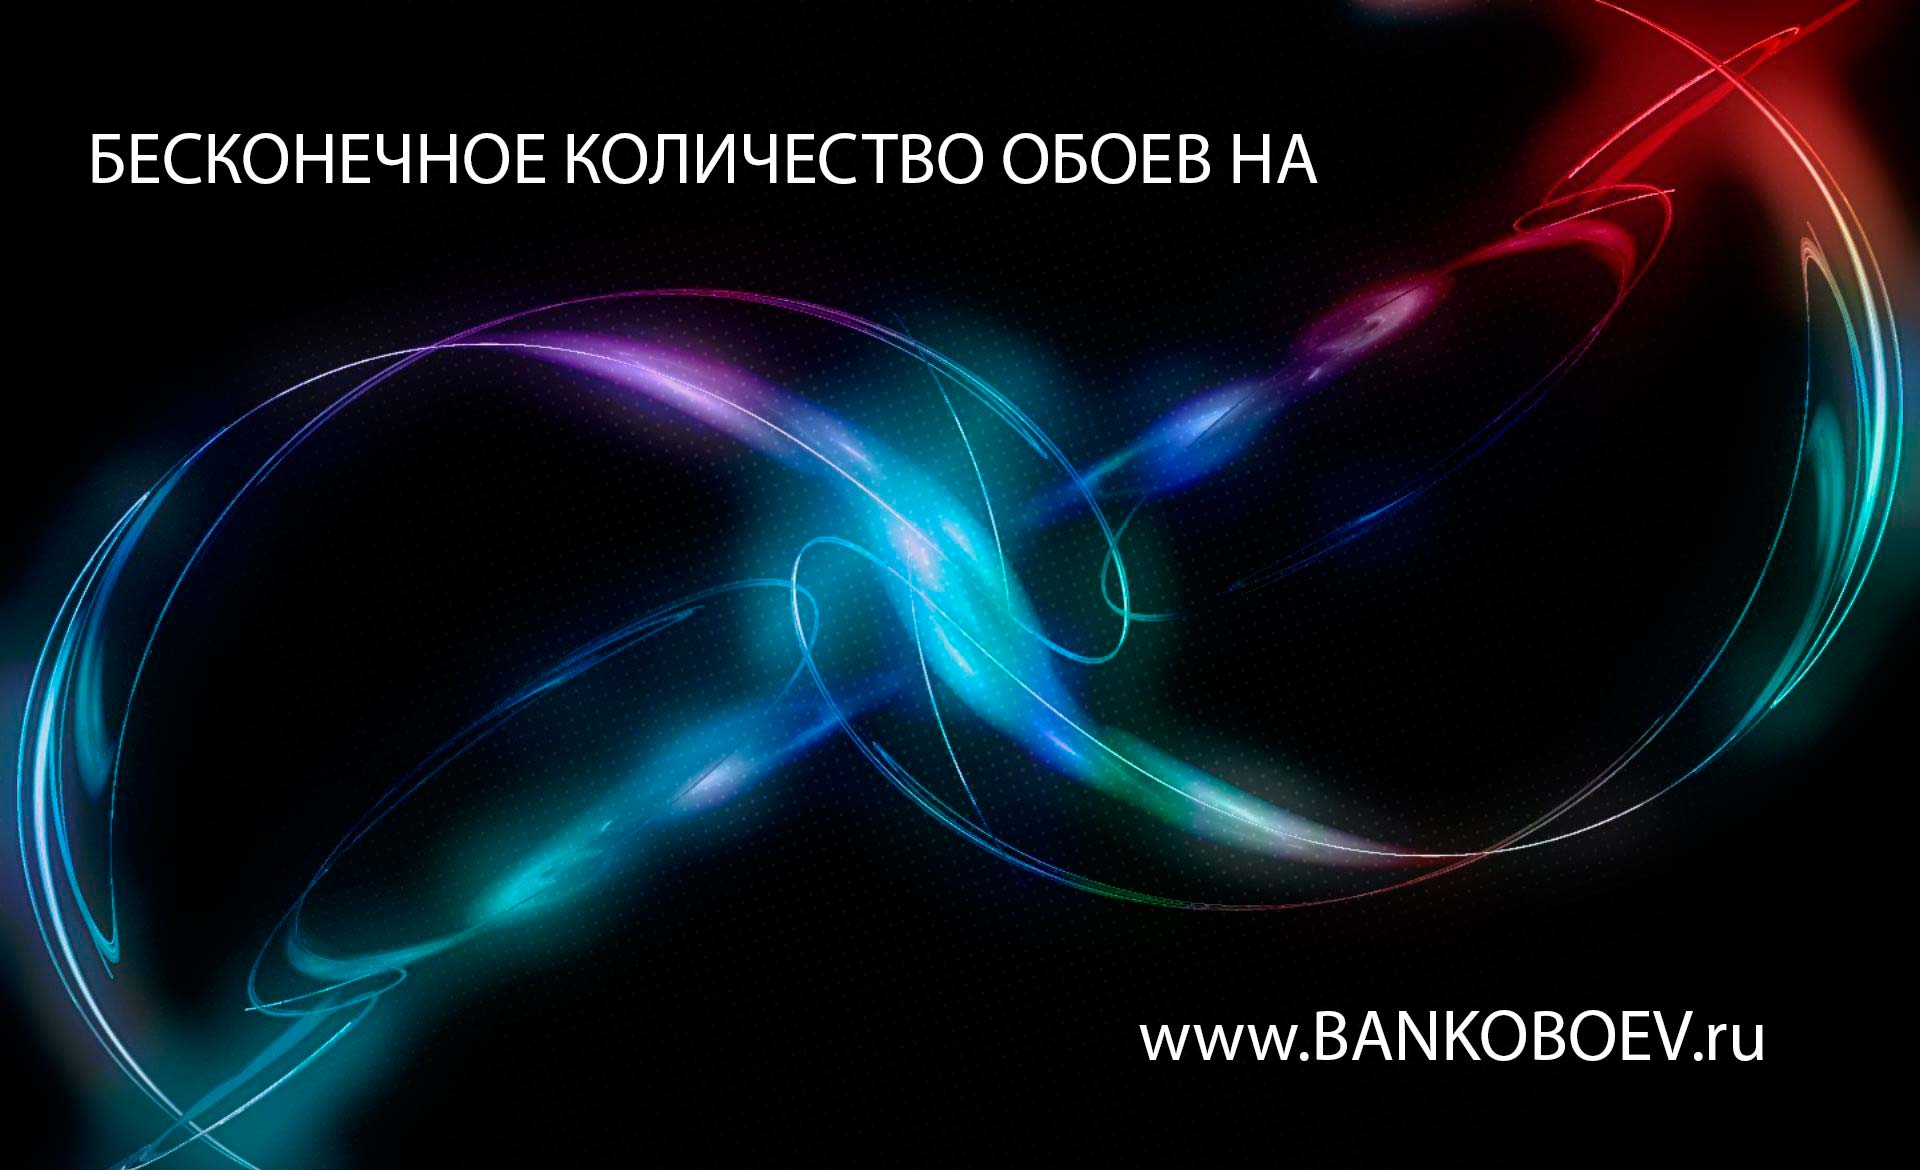 Bankoboev Ru Image Mtq3mjg0 Jpg